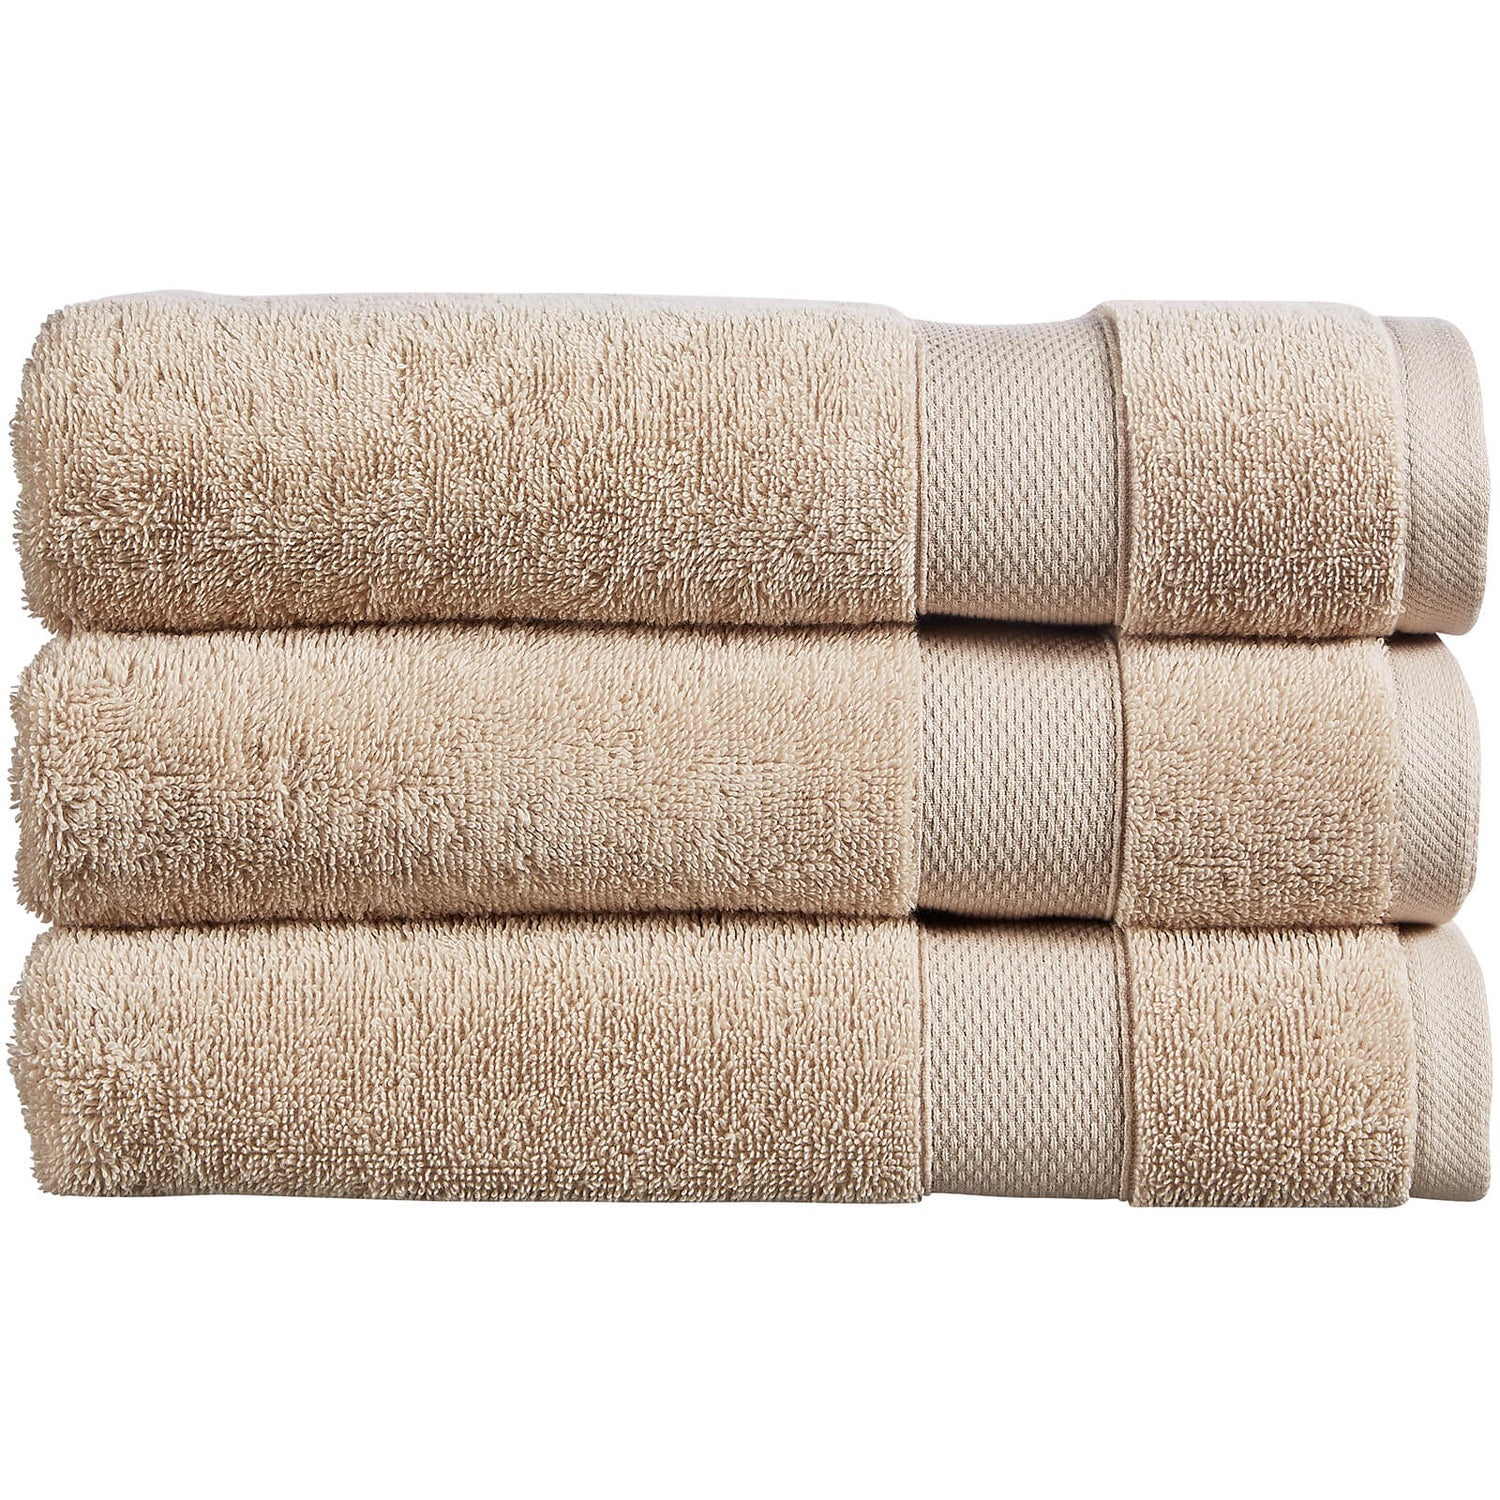 Christy Refresh Bath Towel - Set of 2 - Driftwood